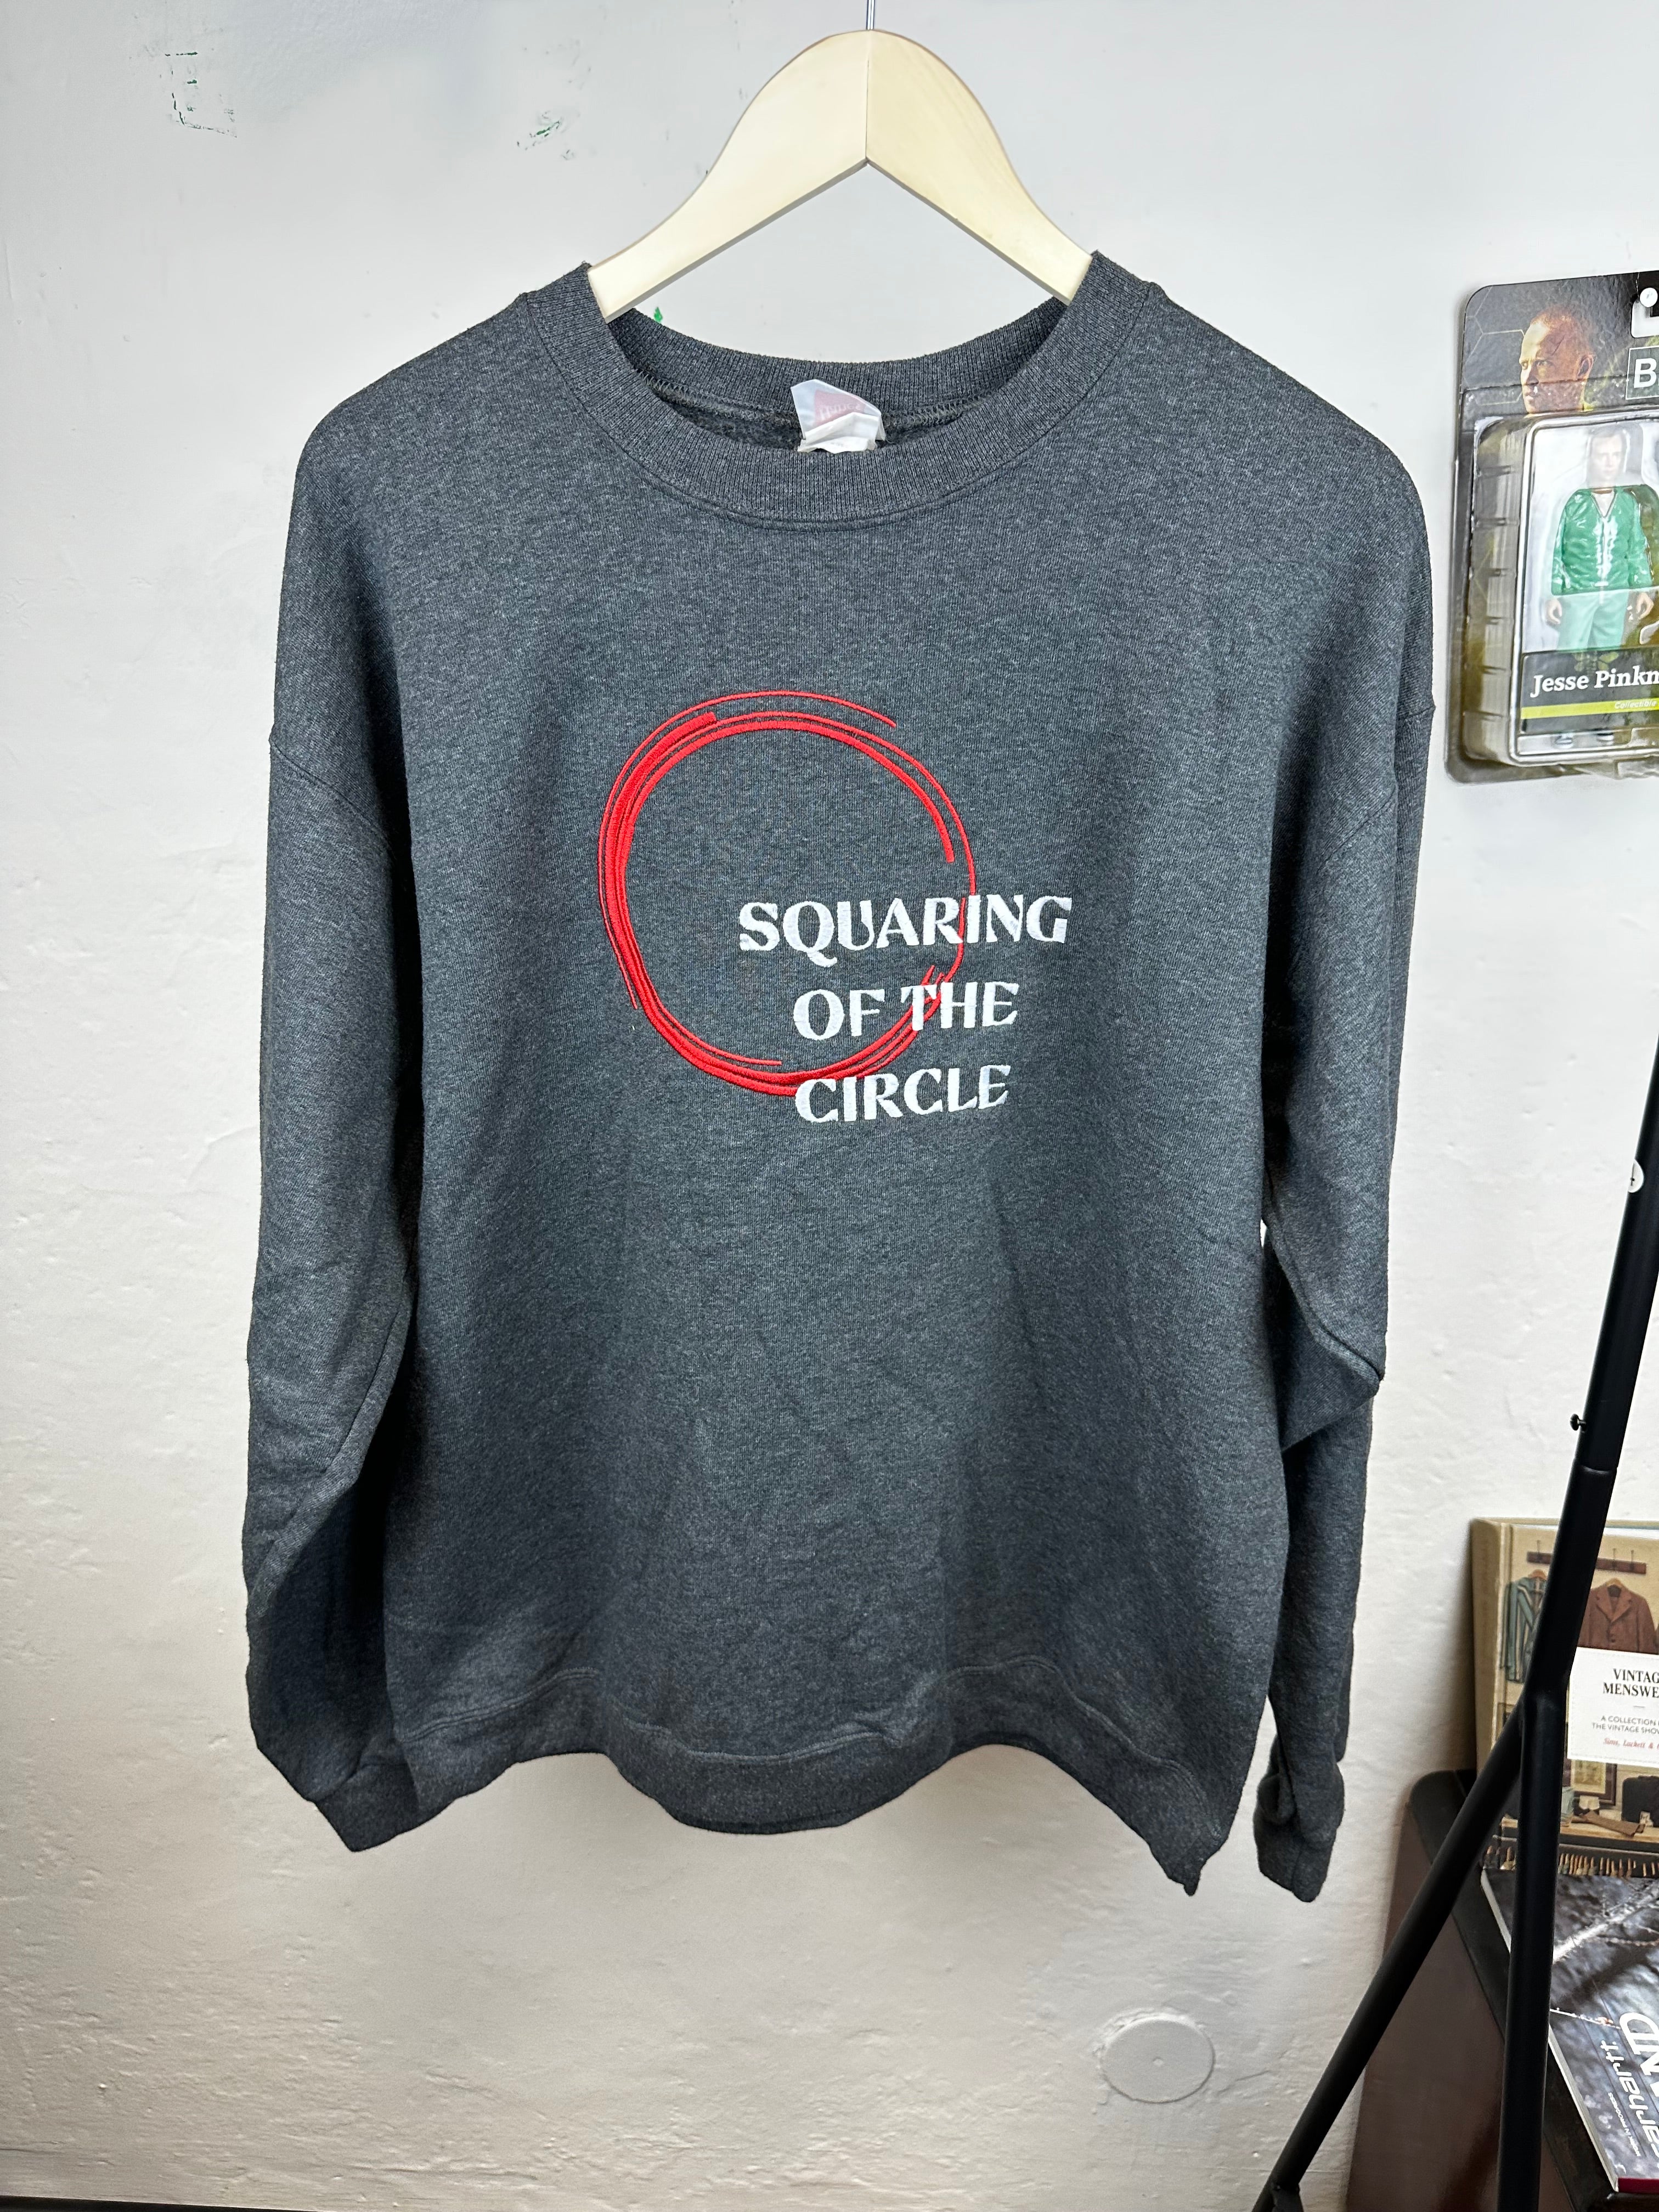 No Introductions - "Squaring of the Circle" crewneck - size XL